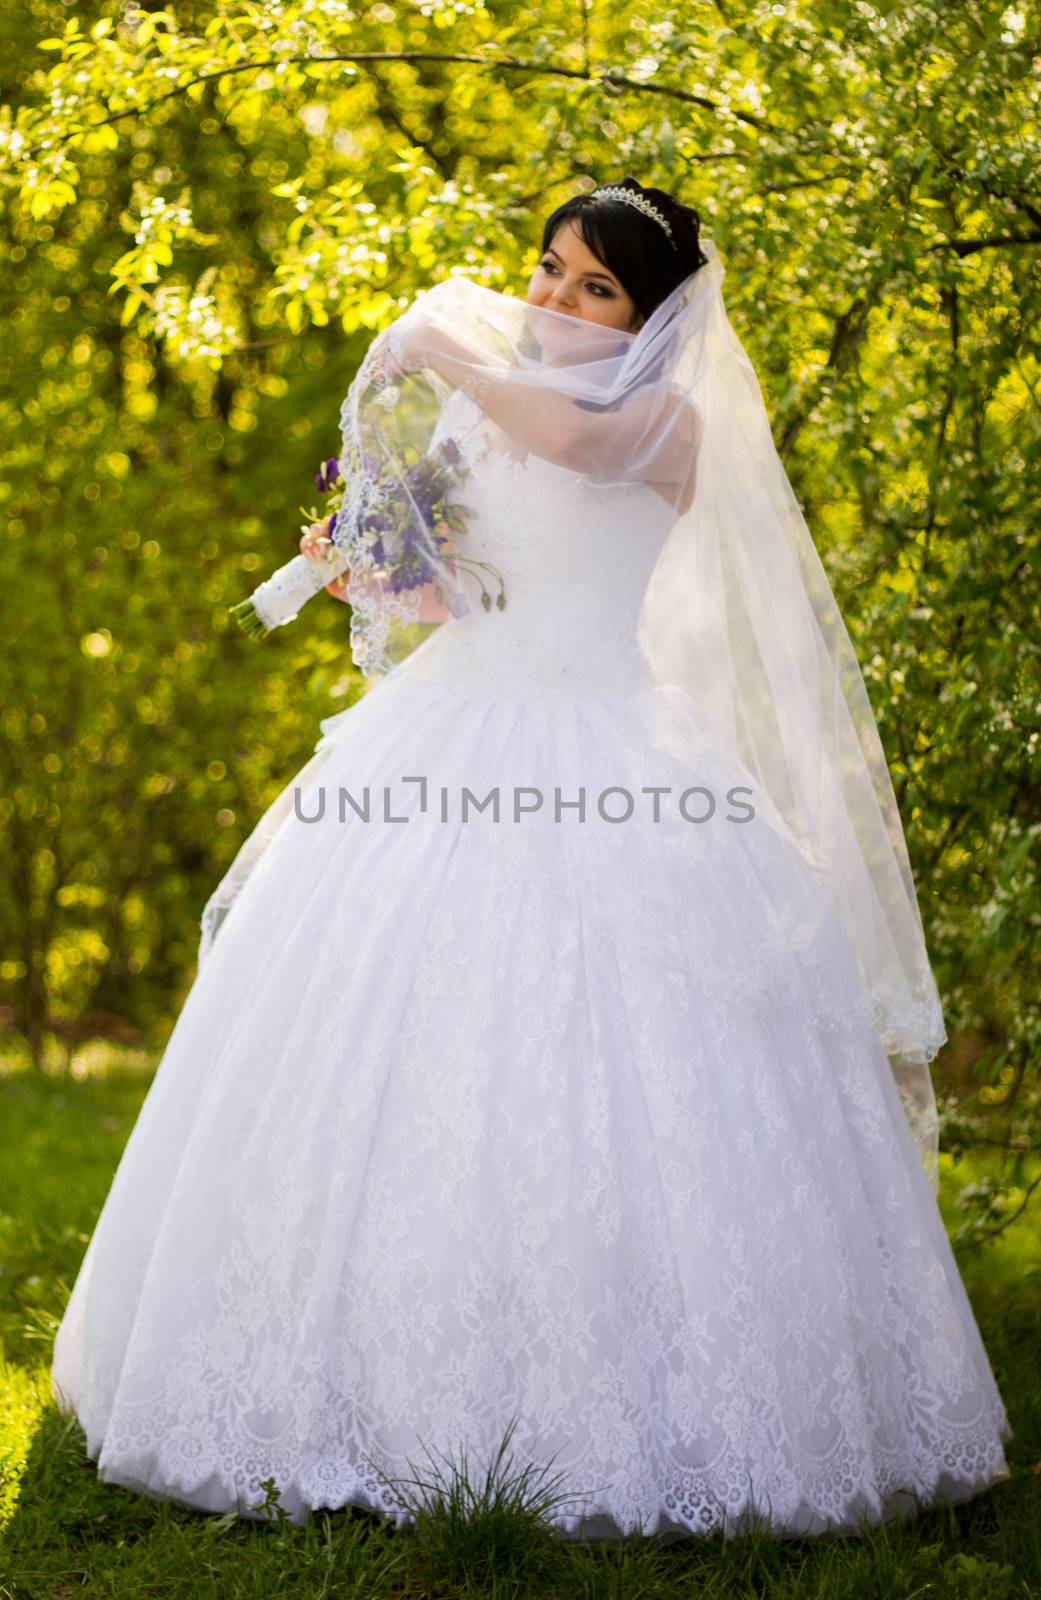 Beautiful bride posing in her wedding day by serhii_lohvyniuk